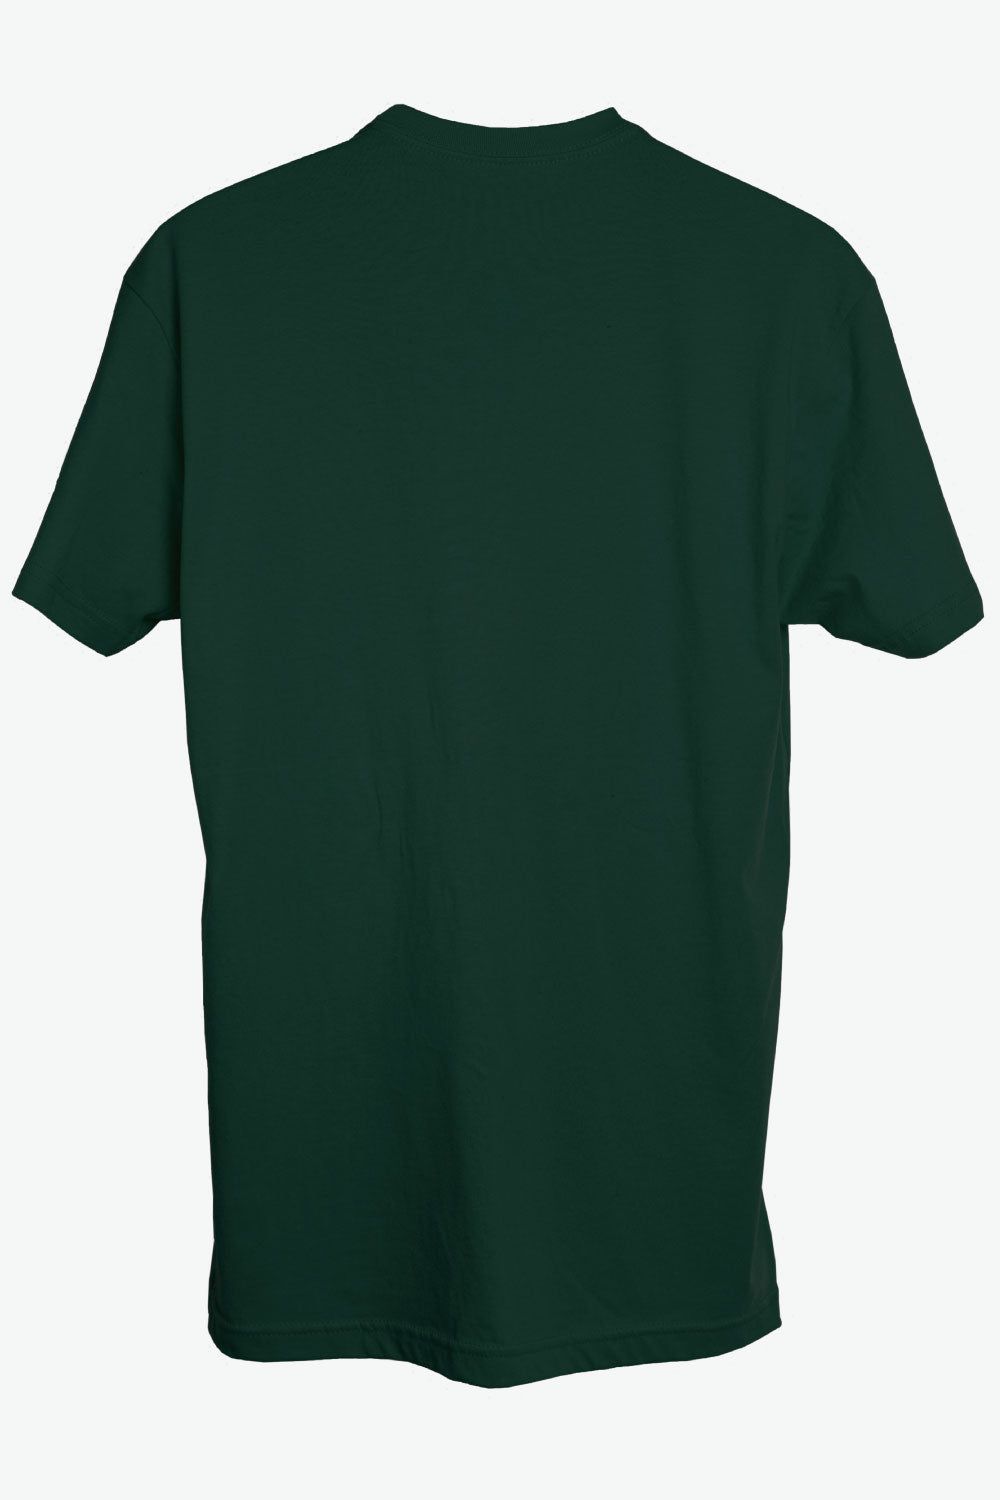 IOTA Green T-Shirt